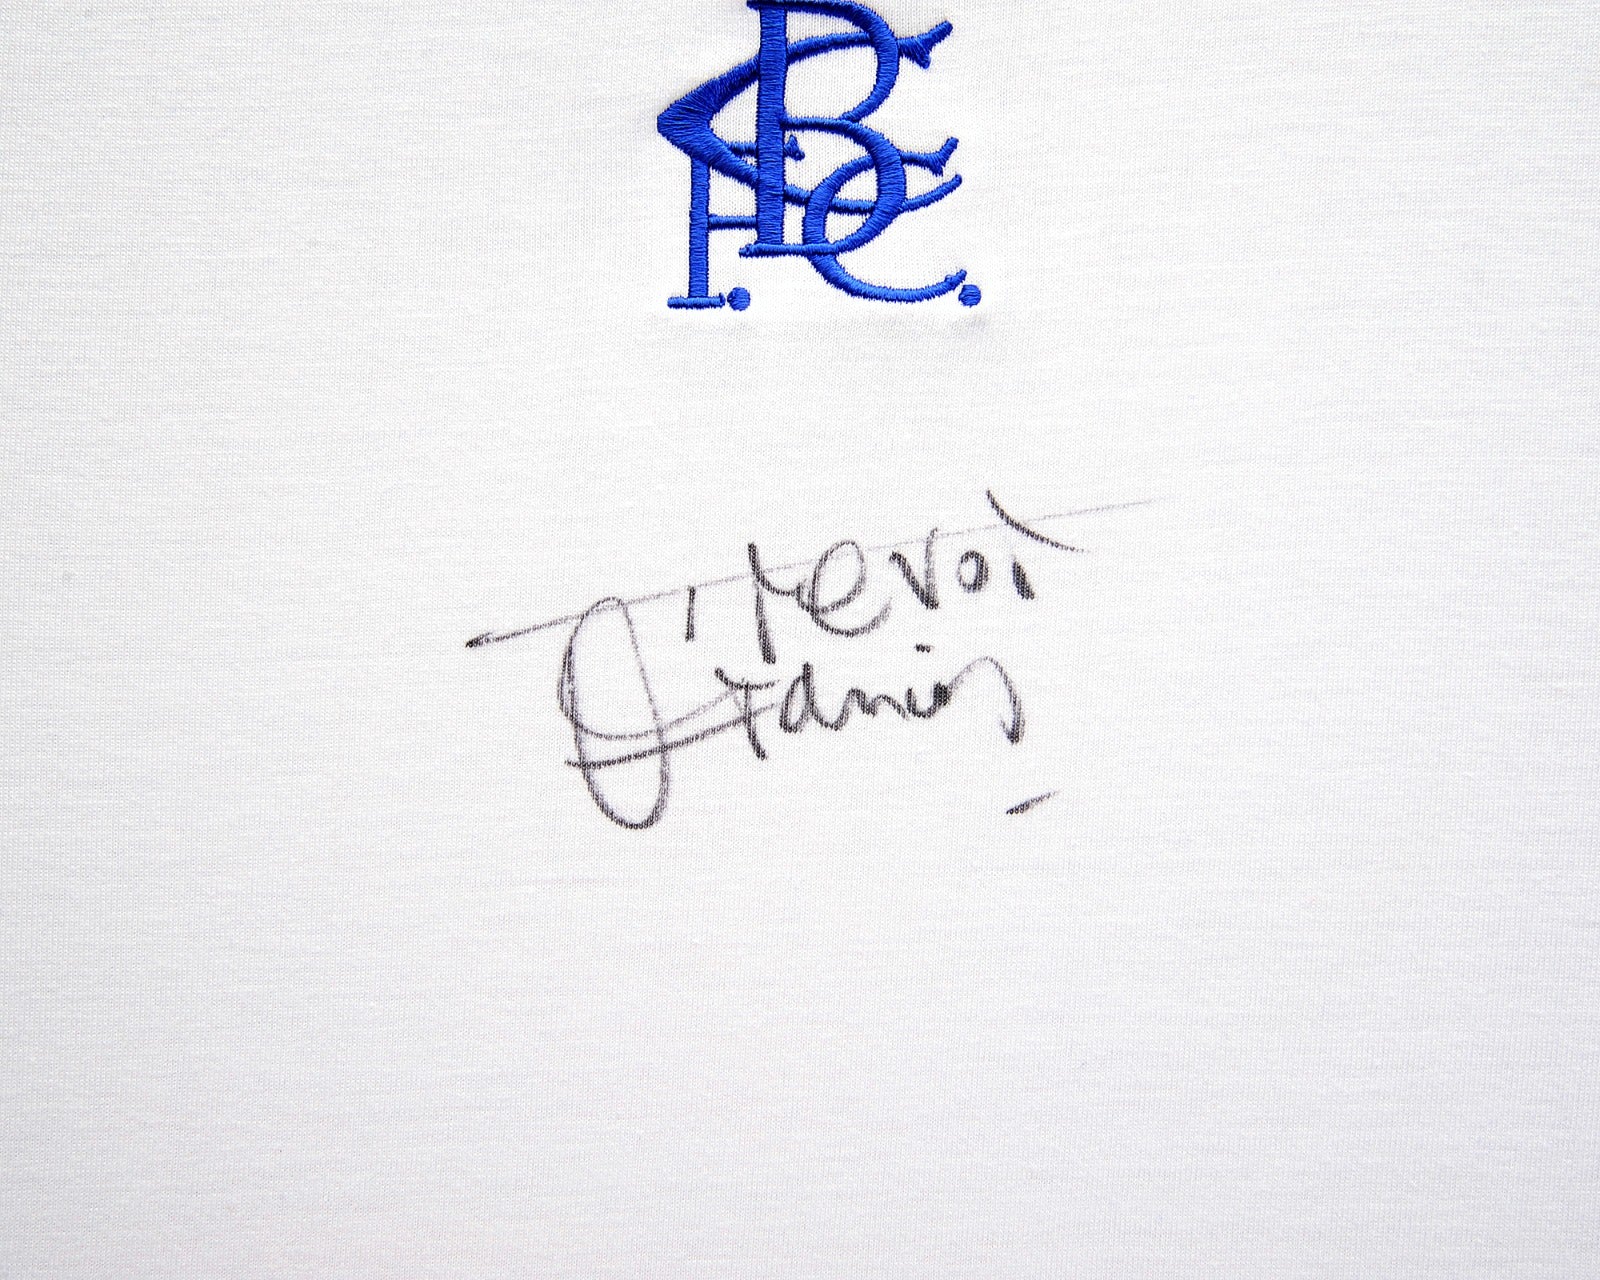 Trevor Francis signed and framed Birmingham City Round Neck Birmingham City Penguin Shirt